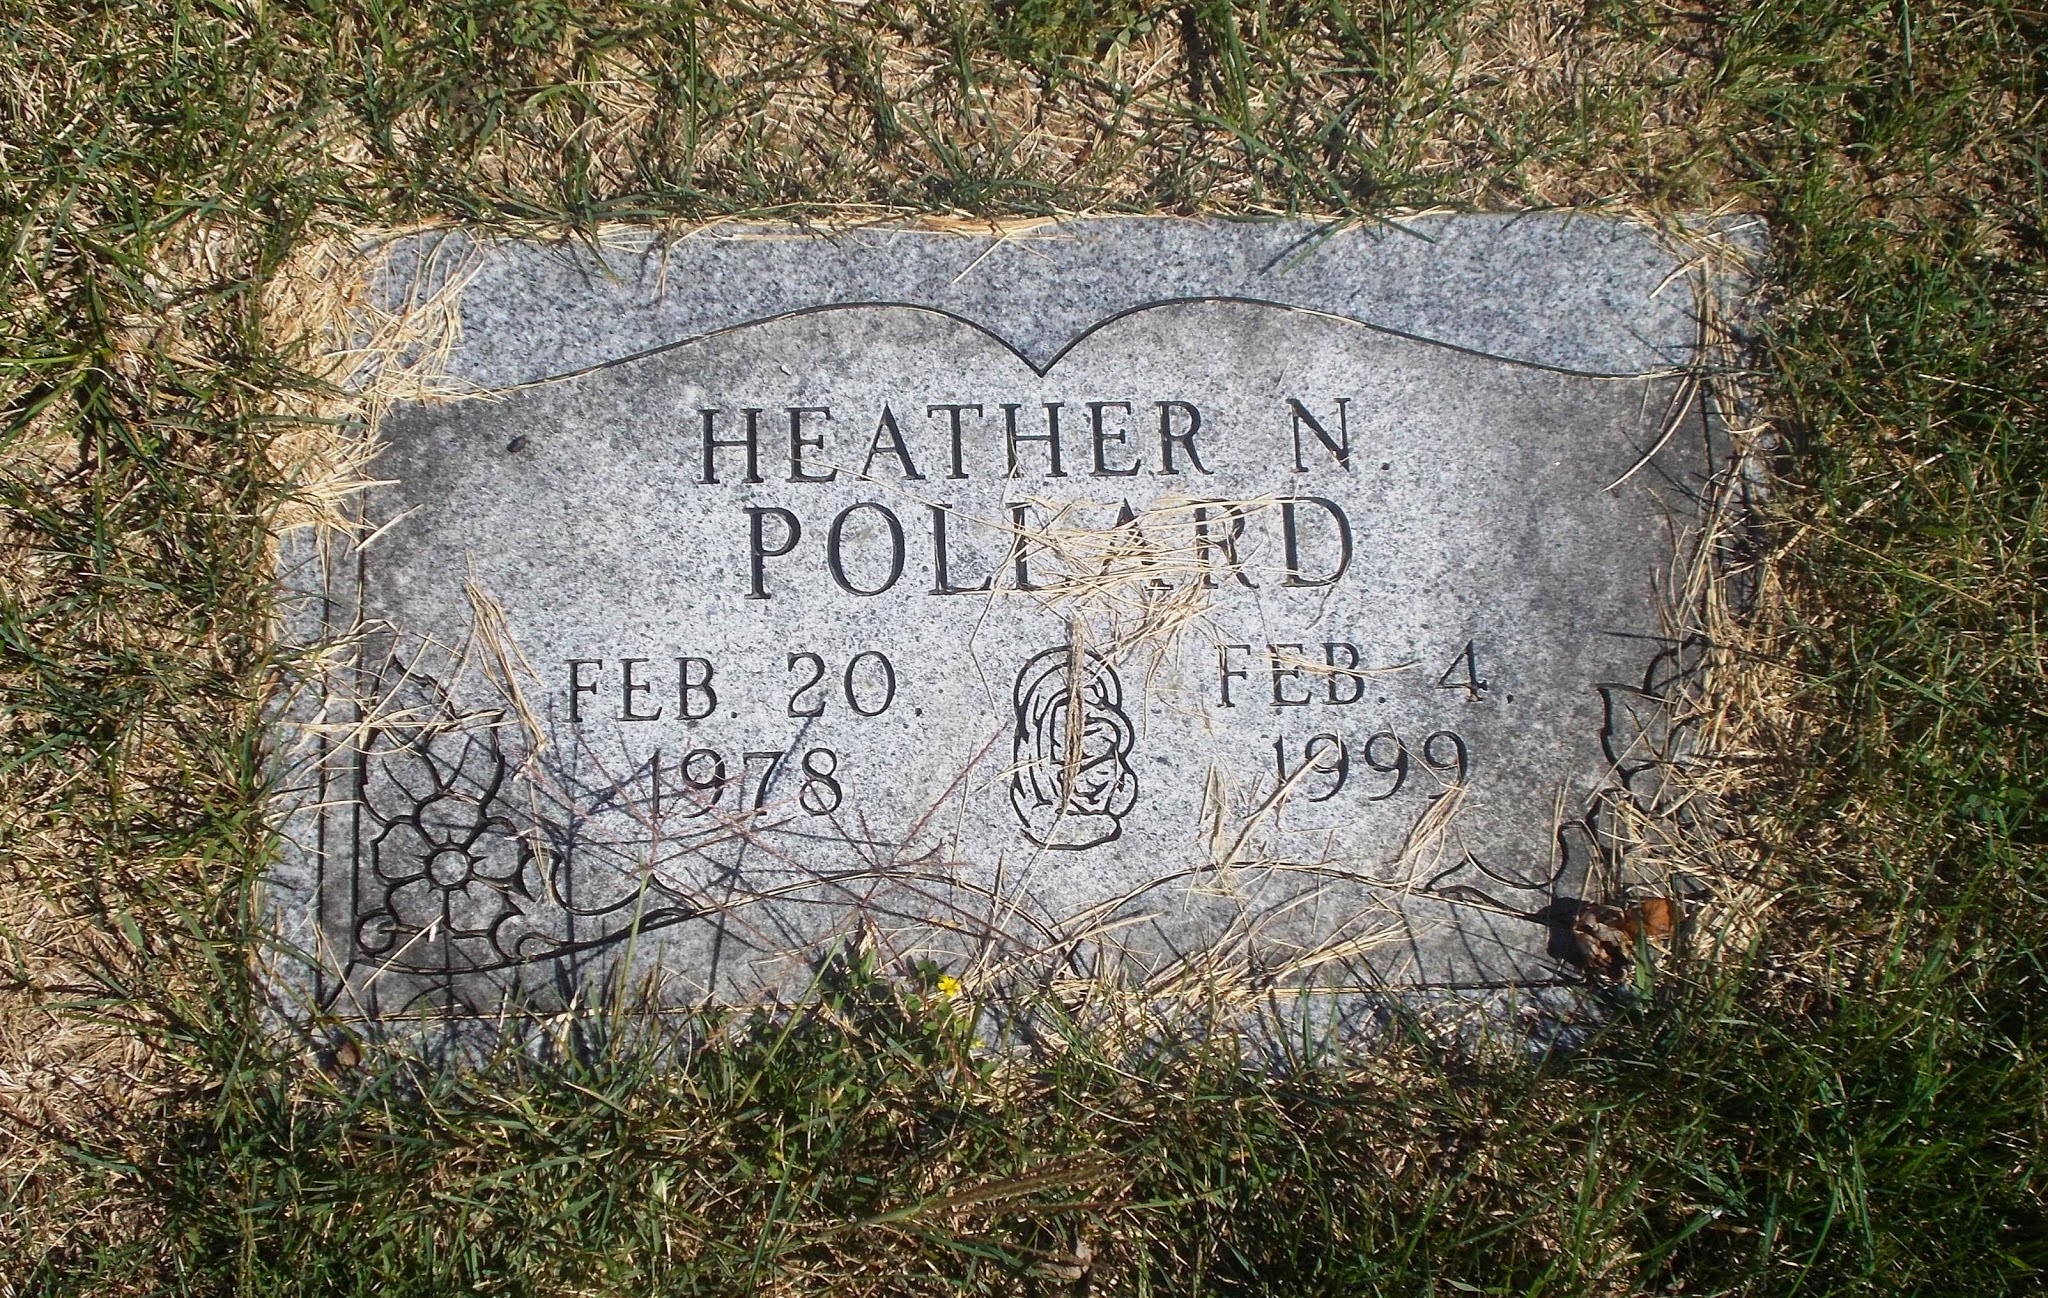 Heather N Pollard